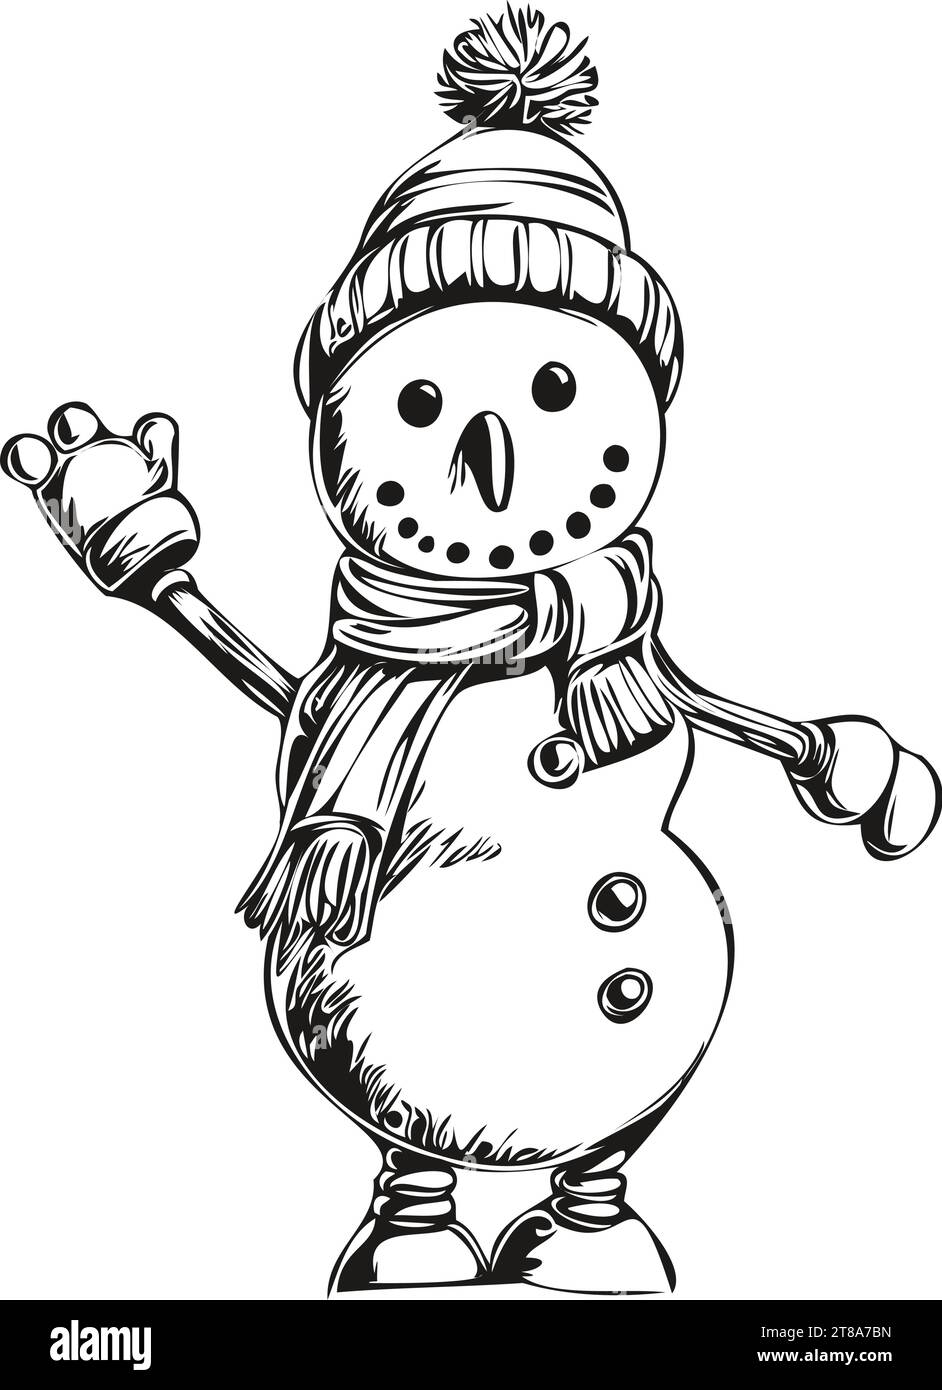 Derek S. Prijatelj - A Happy Snowman Sketch